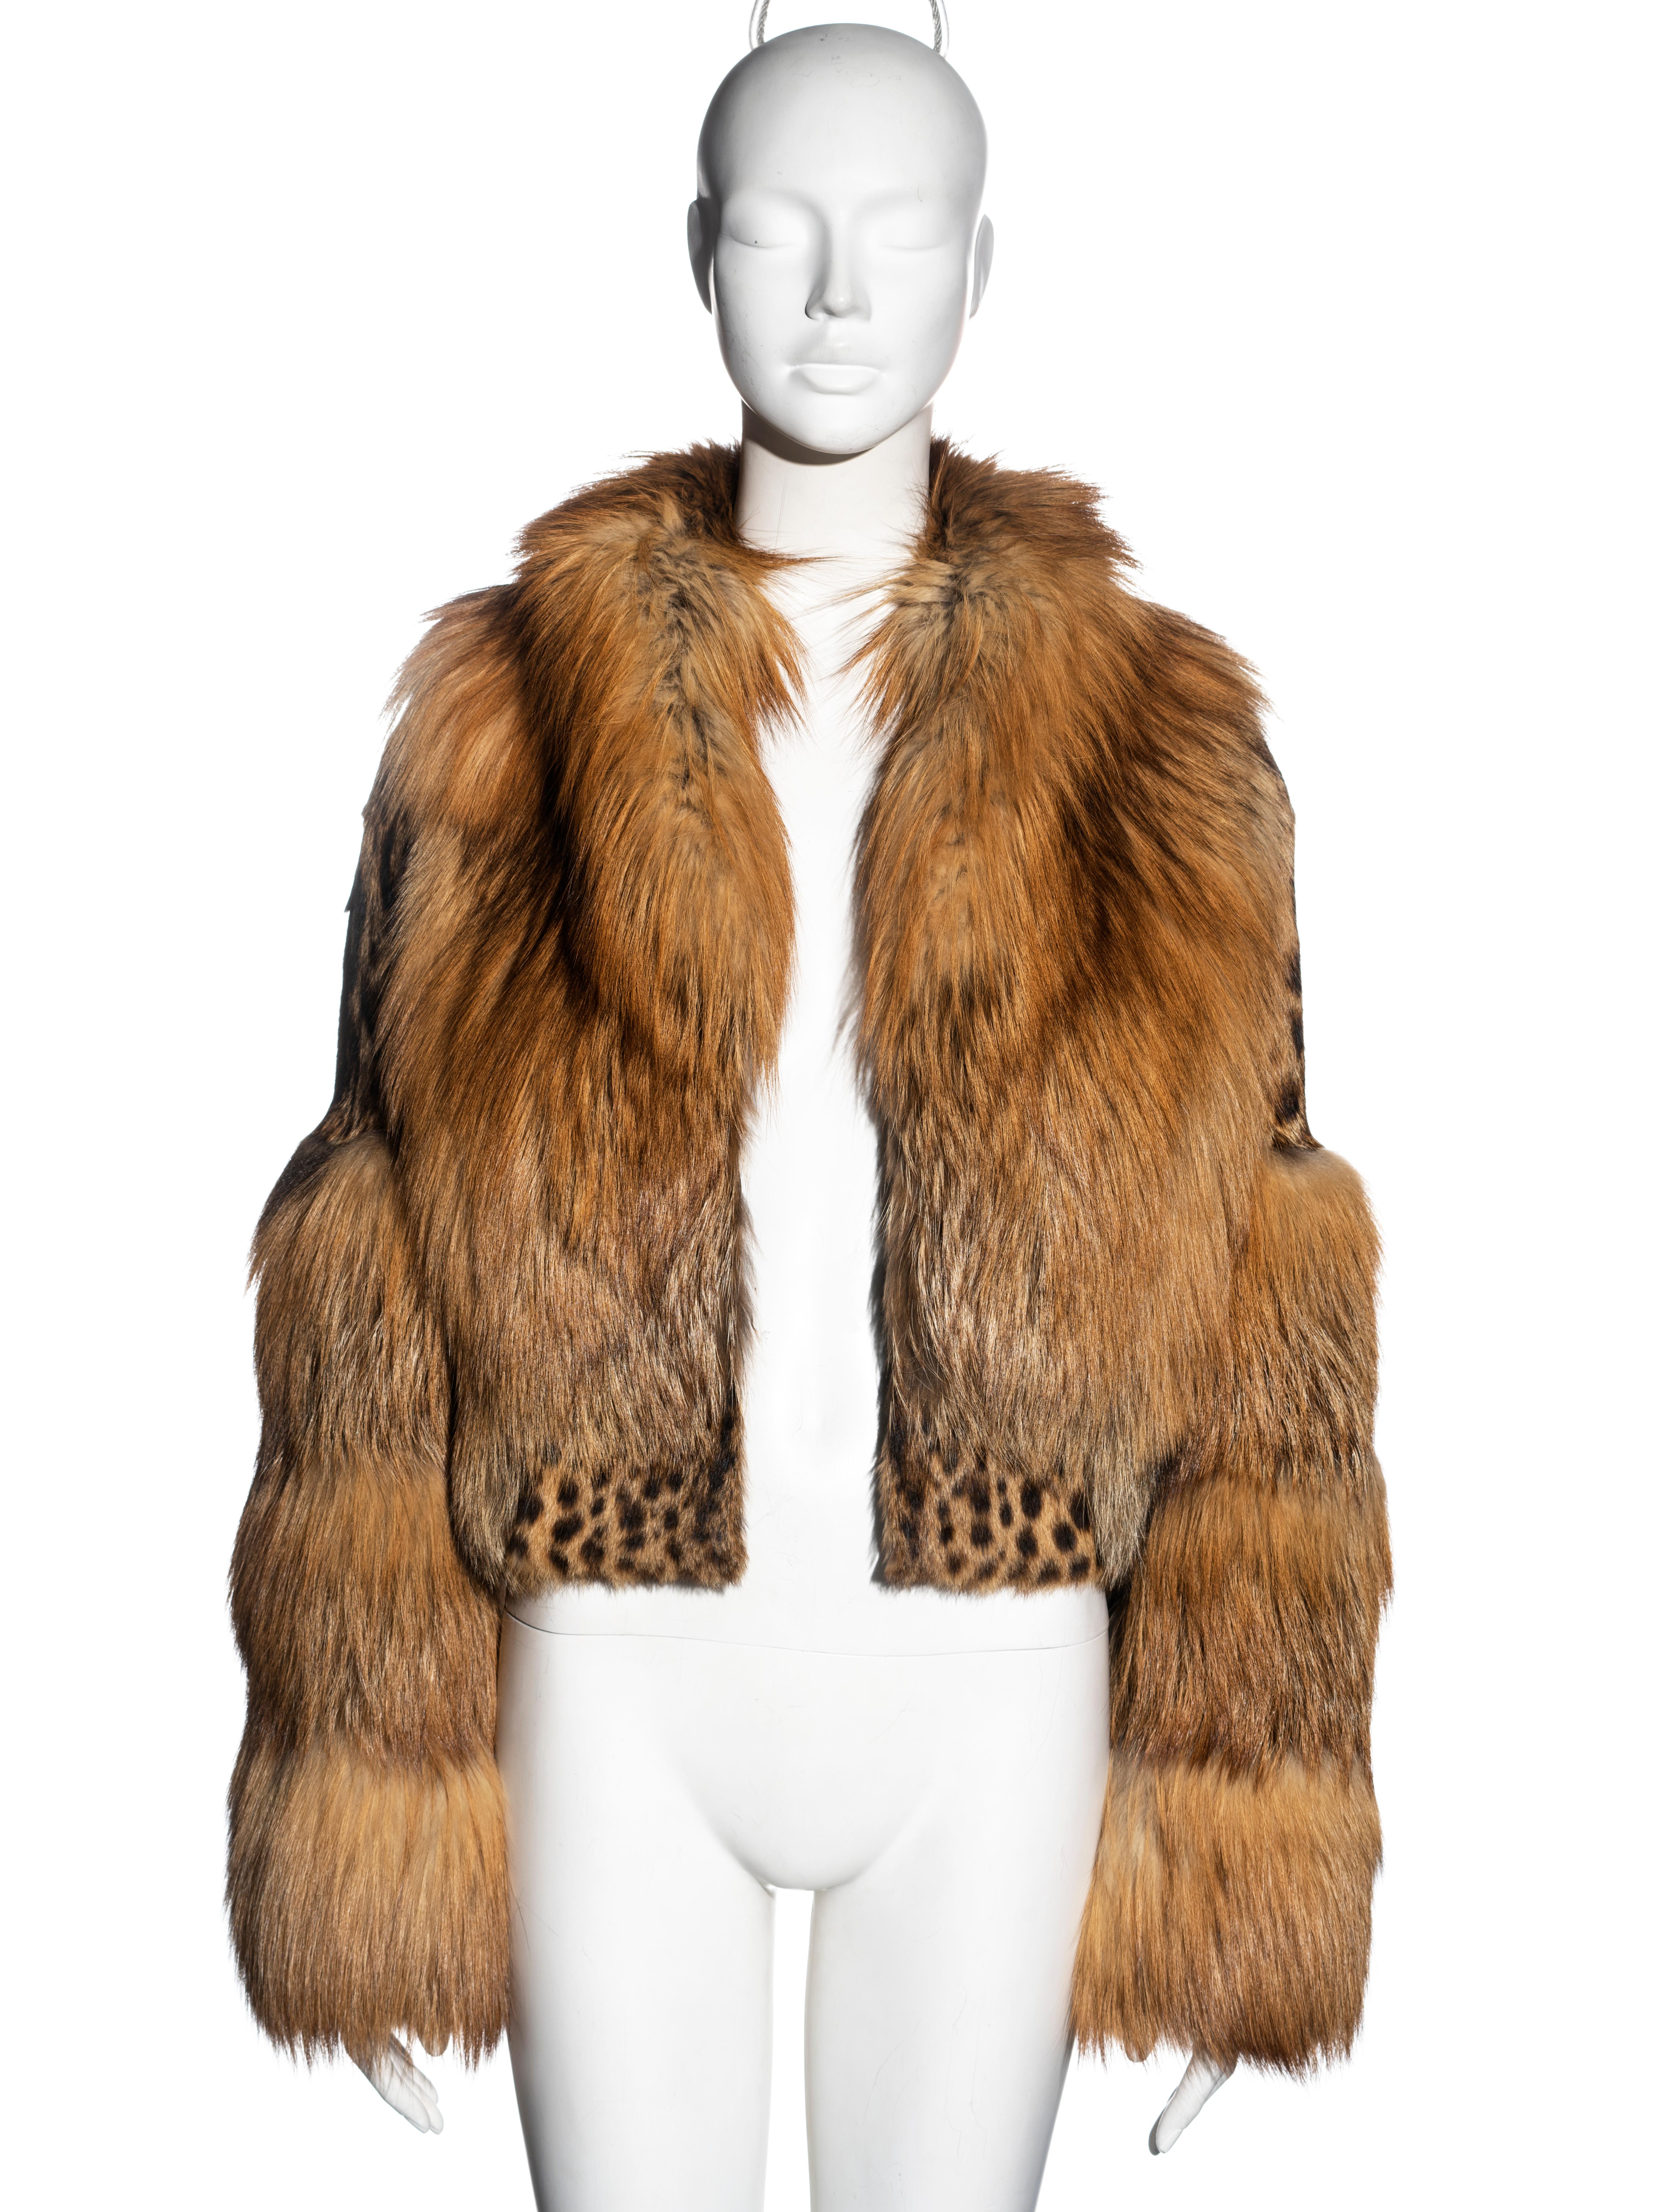 ▪ Gucci fur jacket
▪ Designed by Tom Ford
▪ Fox fur 
▪ Leopard-print rabbit fur
▪ Black lambskin leather interior
▪ Size approx. Medium
▪ Fall-Winter 1999
▪ 100% Fox, 100% Rabbit, 100% Leather
▪ Made in Italy
